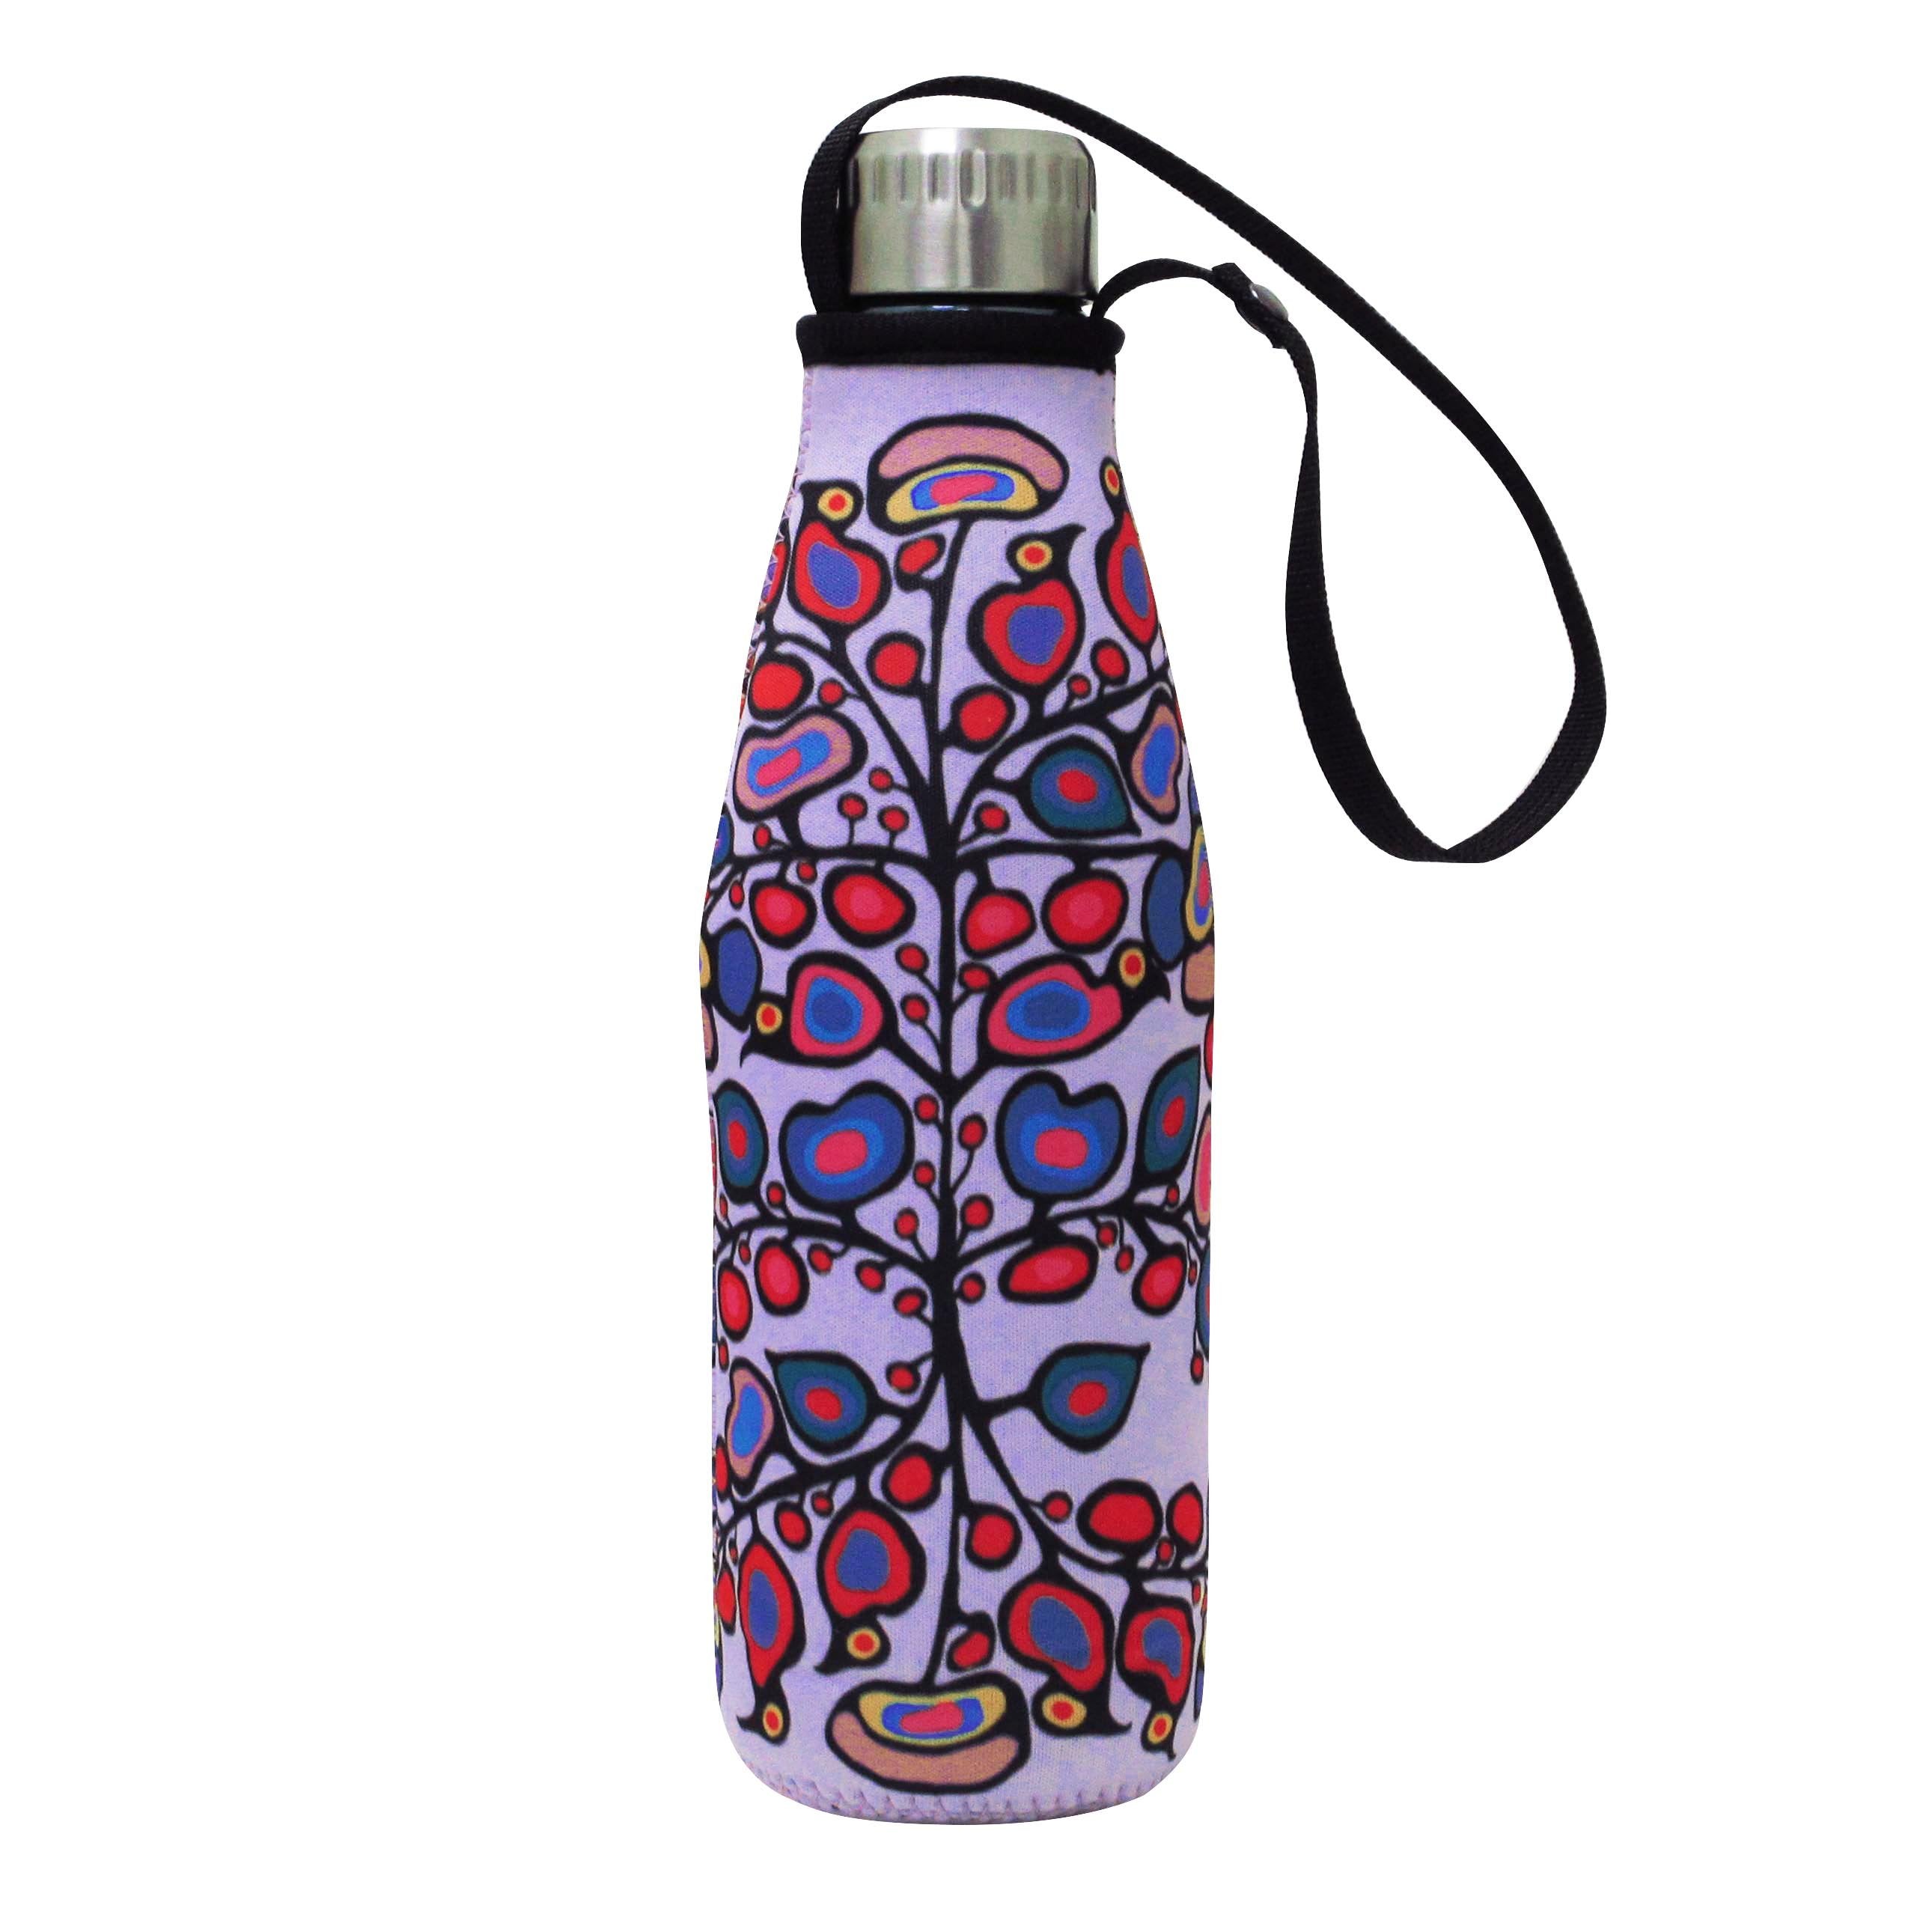 Norval Morrisseau Woodland Floral Water Bottle and Sleeve - Oscardo